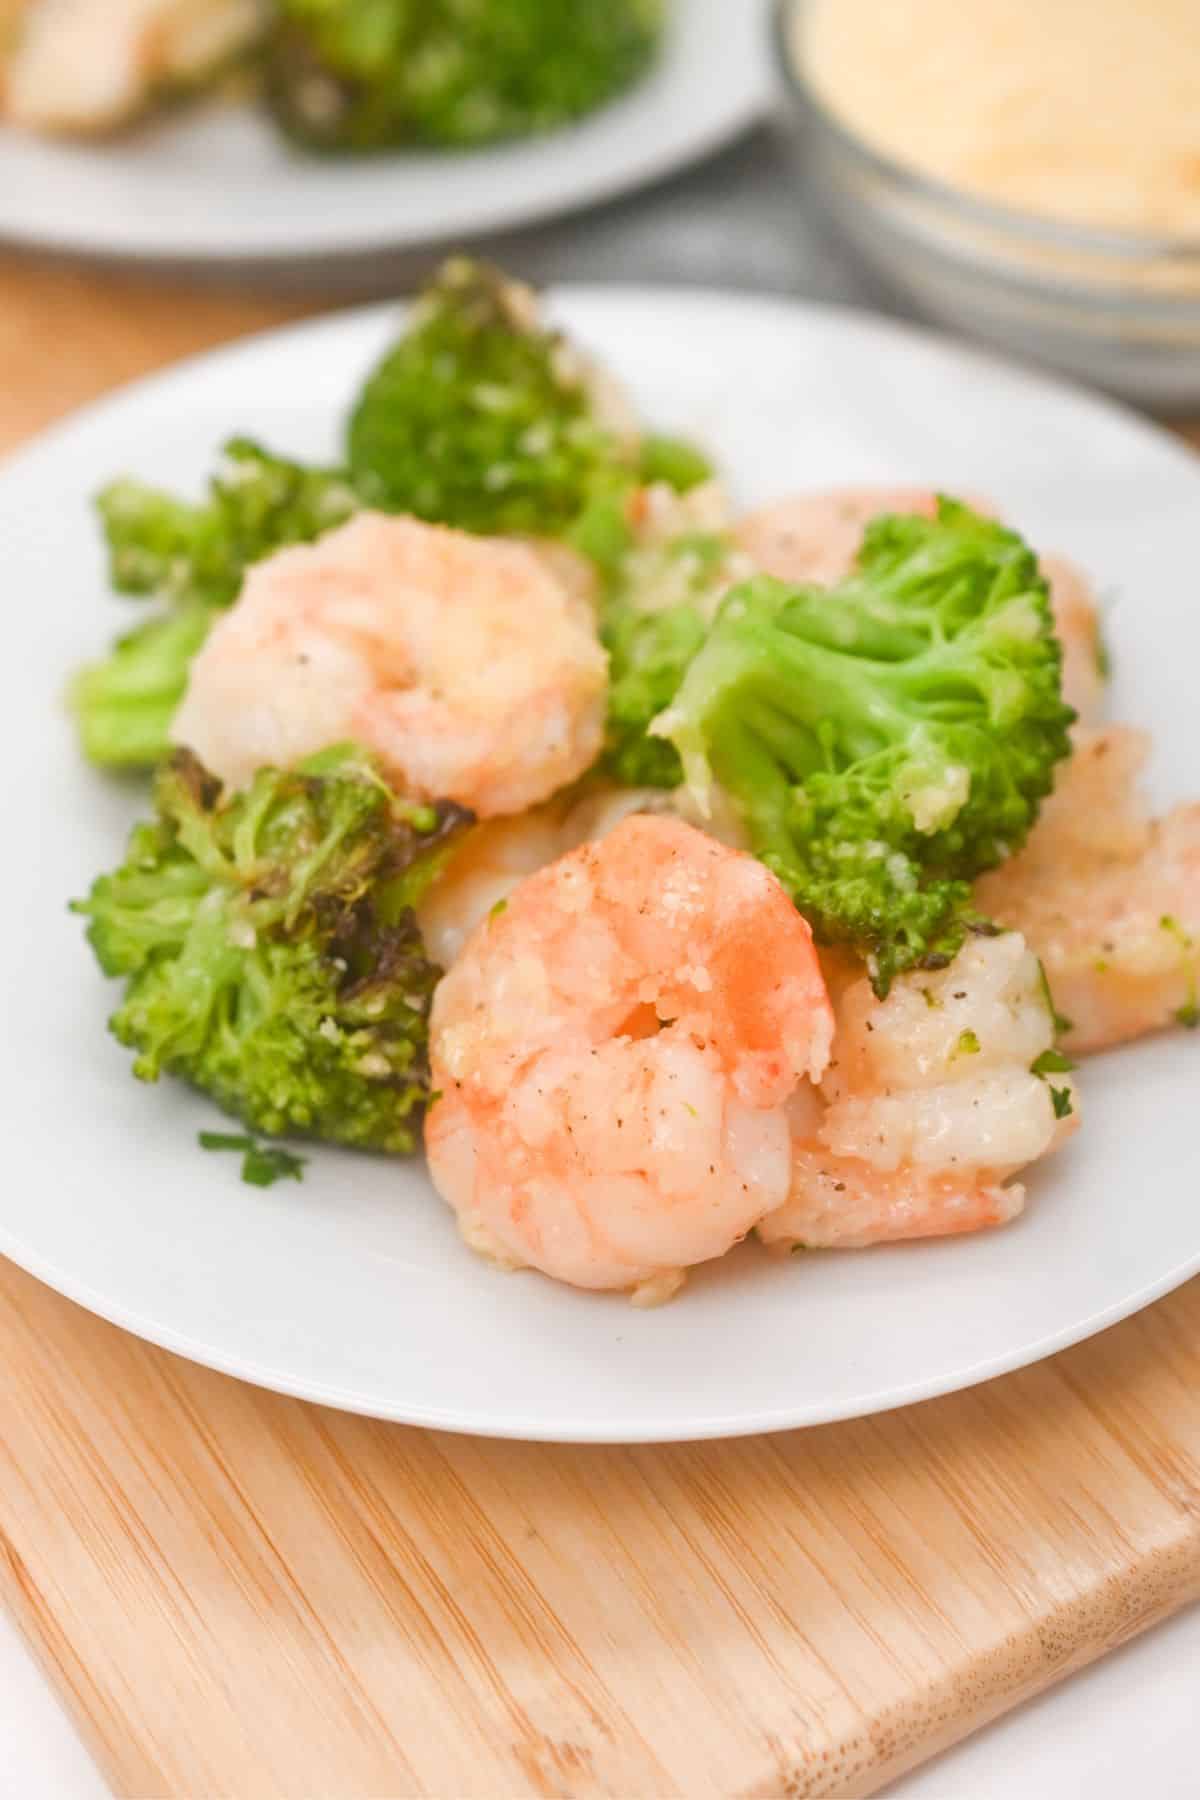 Shrimp and broccoli on a plate